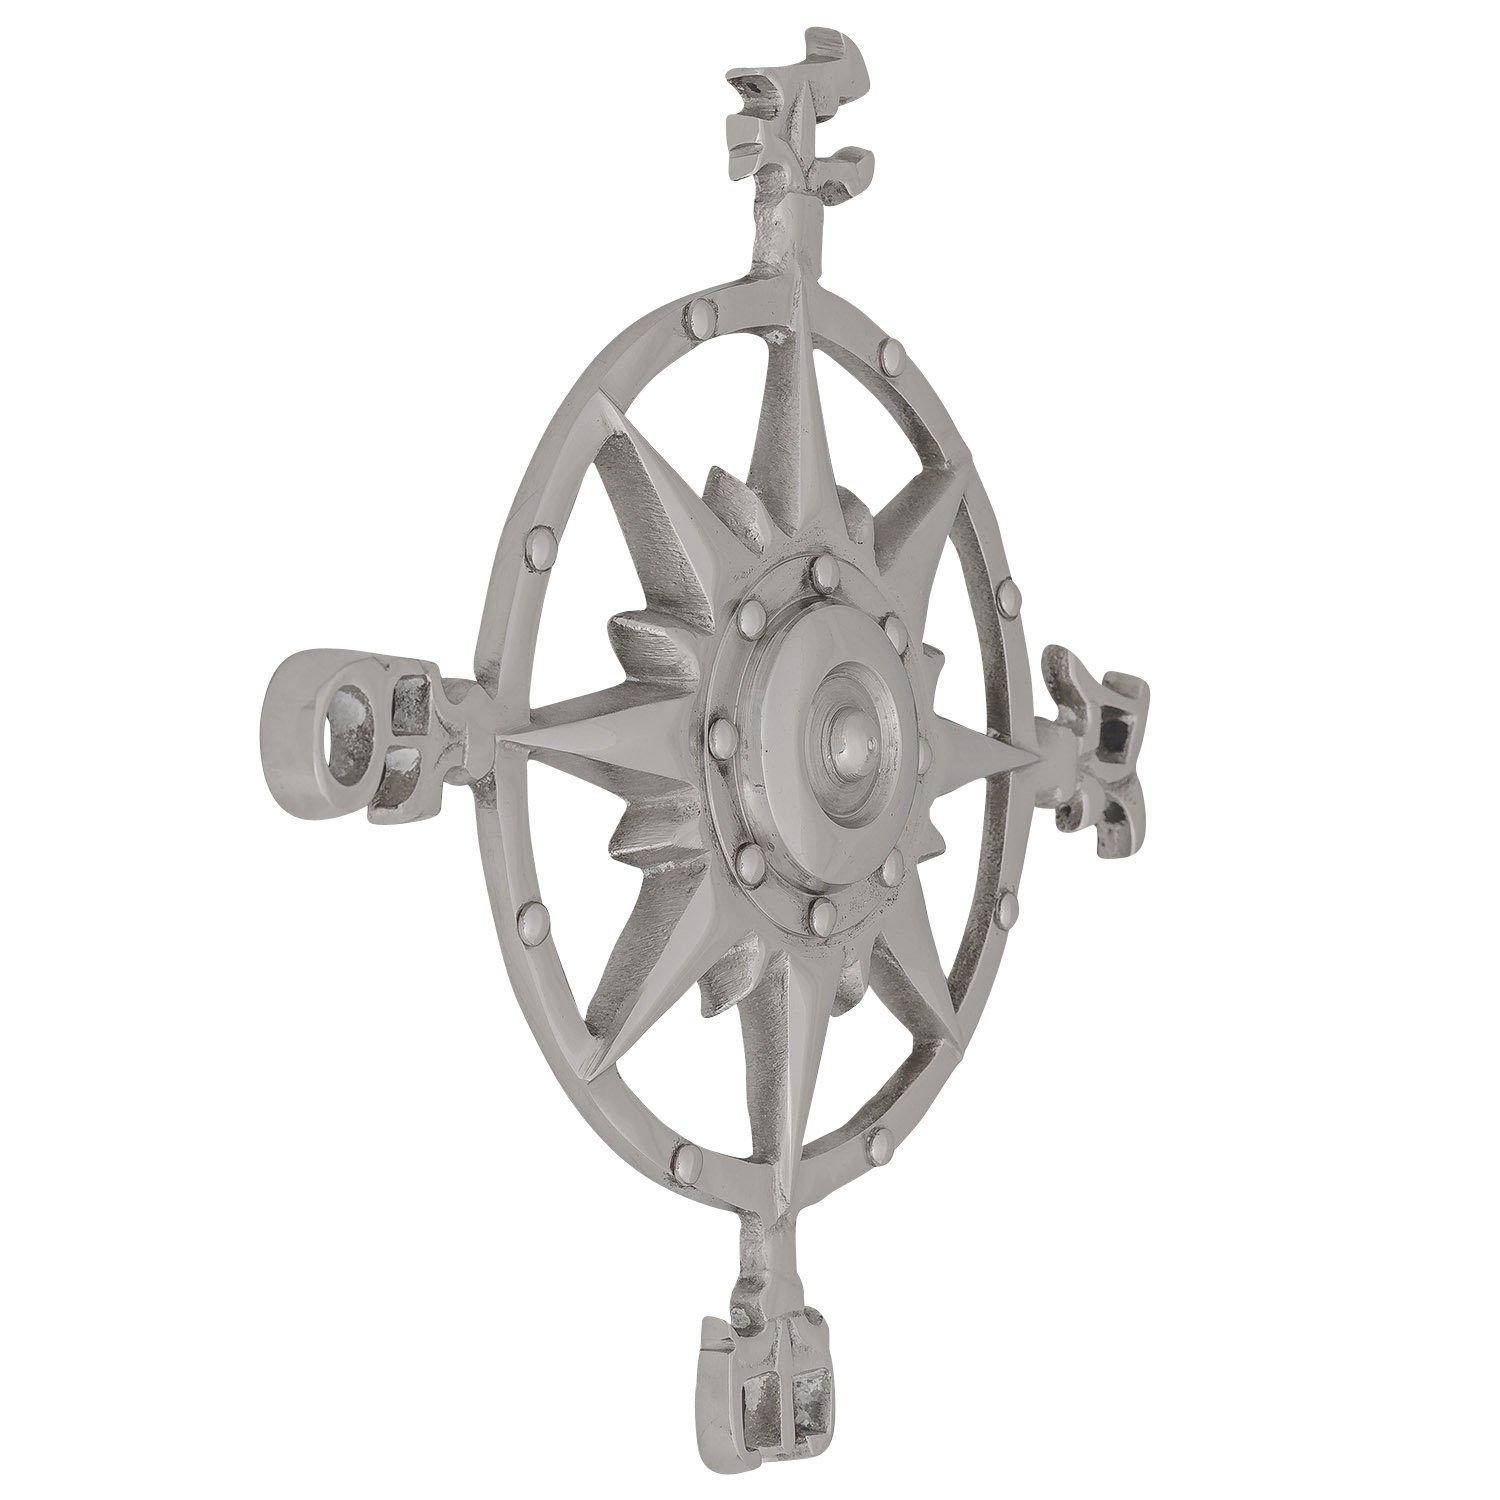 Kompass Windrose 30cm Maritim Wanddekoration Kompass Nautik Aubaho Navigation Schiff